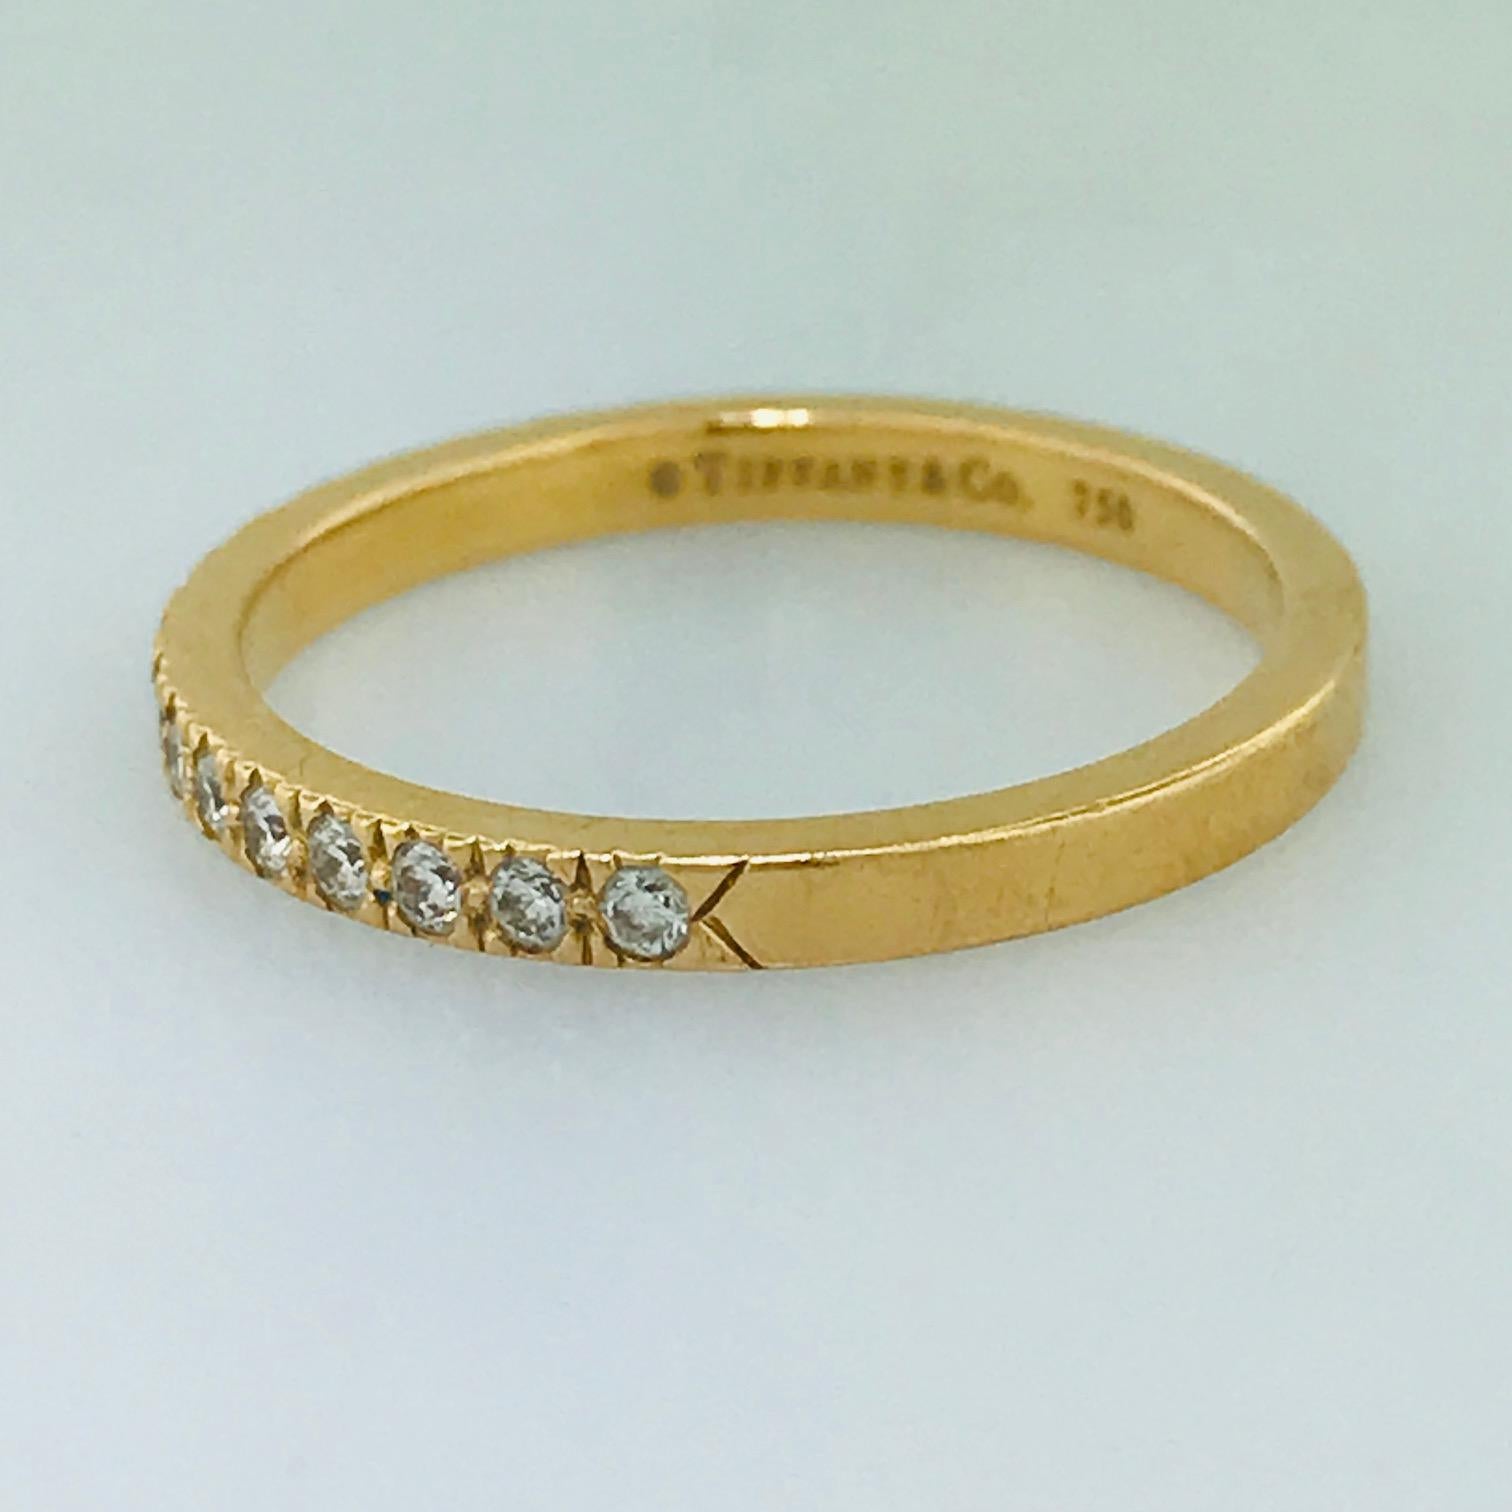 Tiffany Wedding Band 18k Rose Gold Tiffany & Co. Ring, .30 carat diamond weight 1